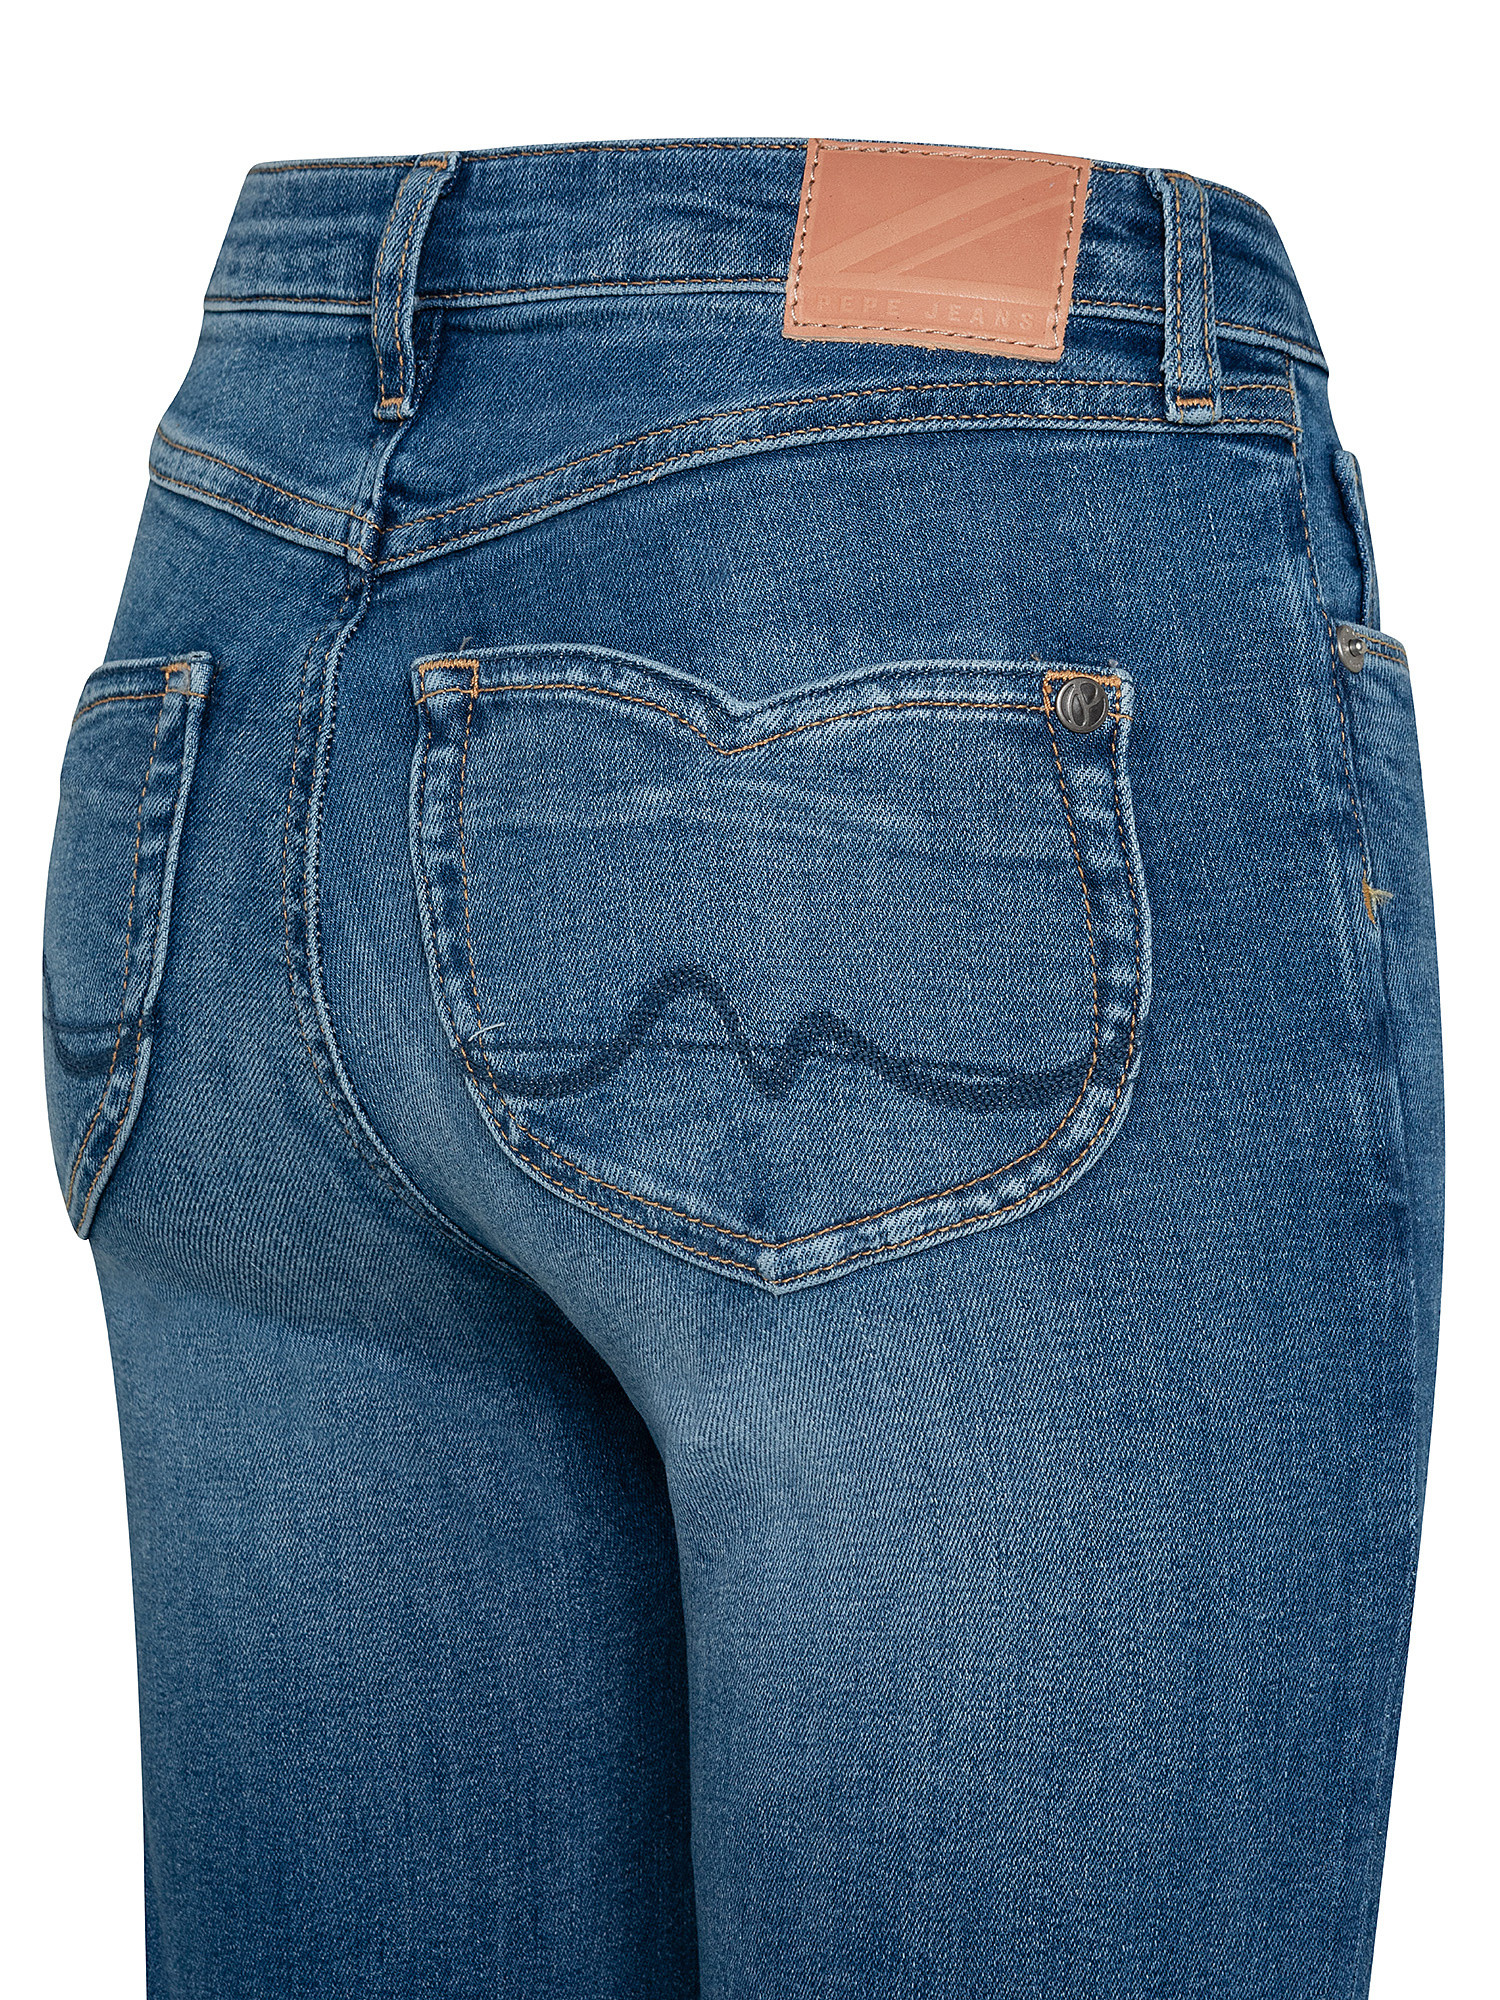 Willa flared jeans, Denim, large image number 2